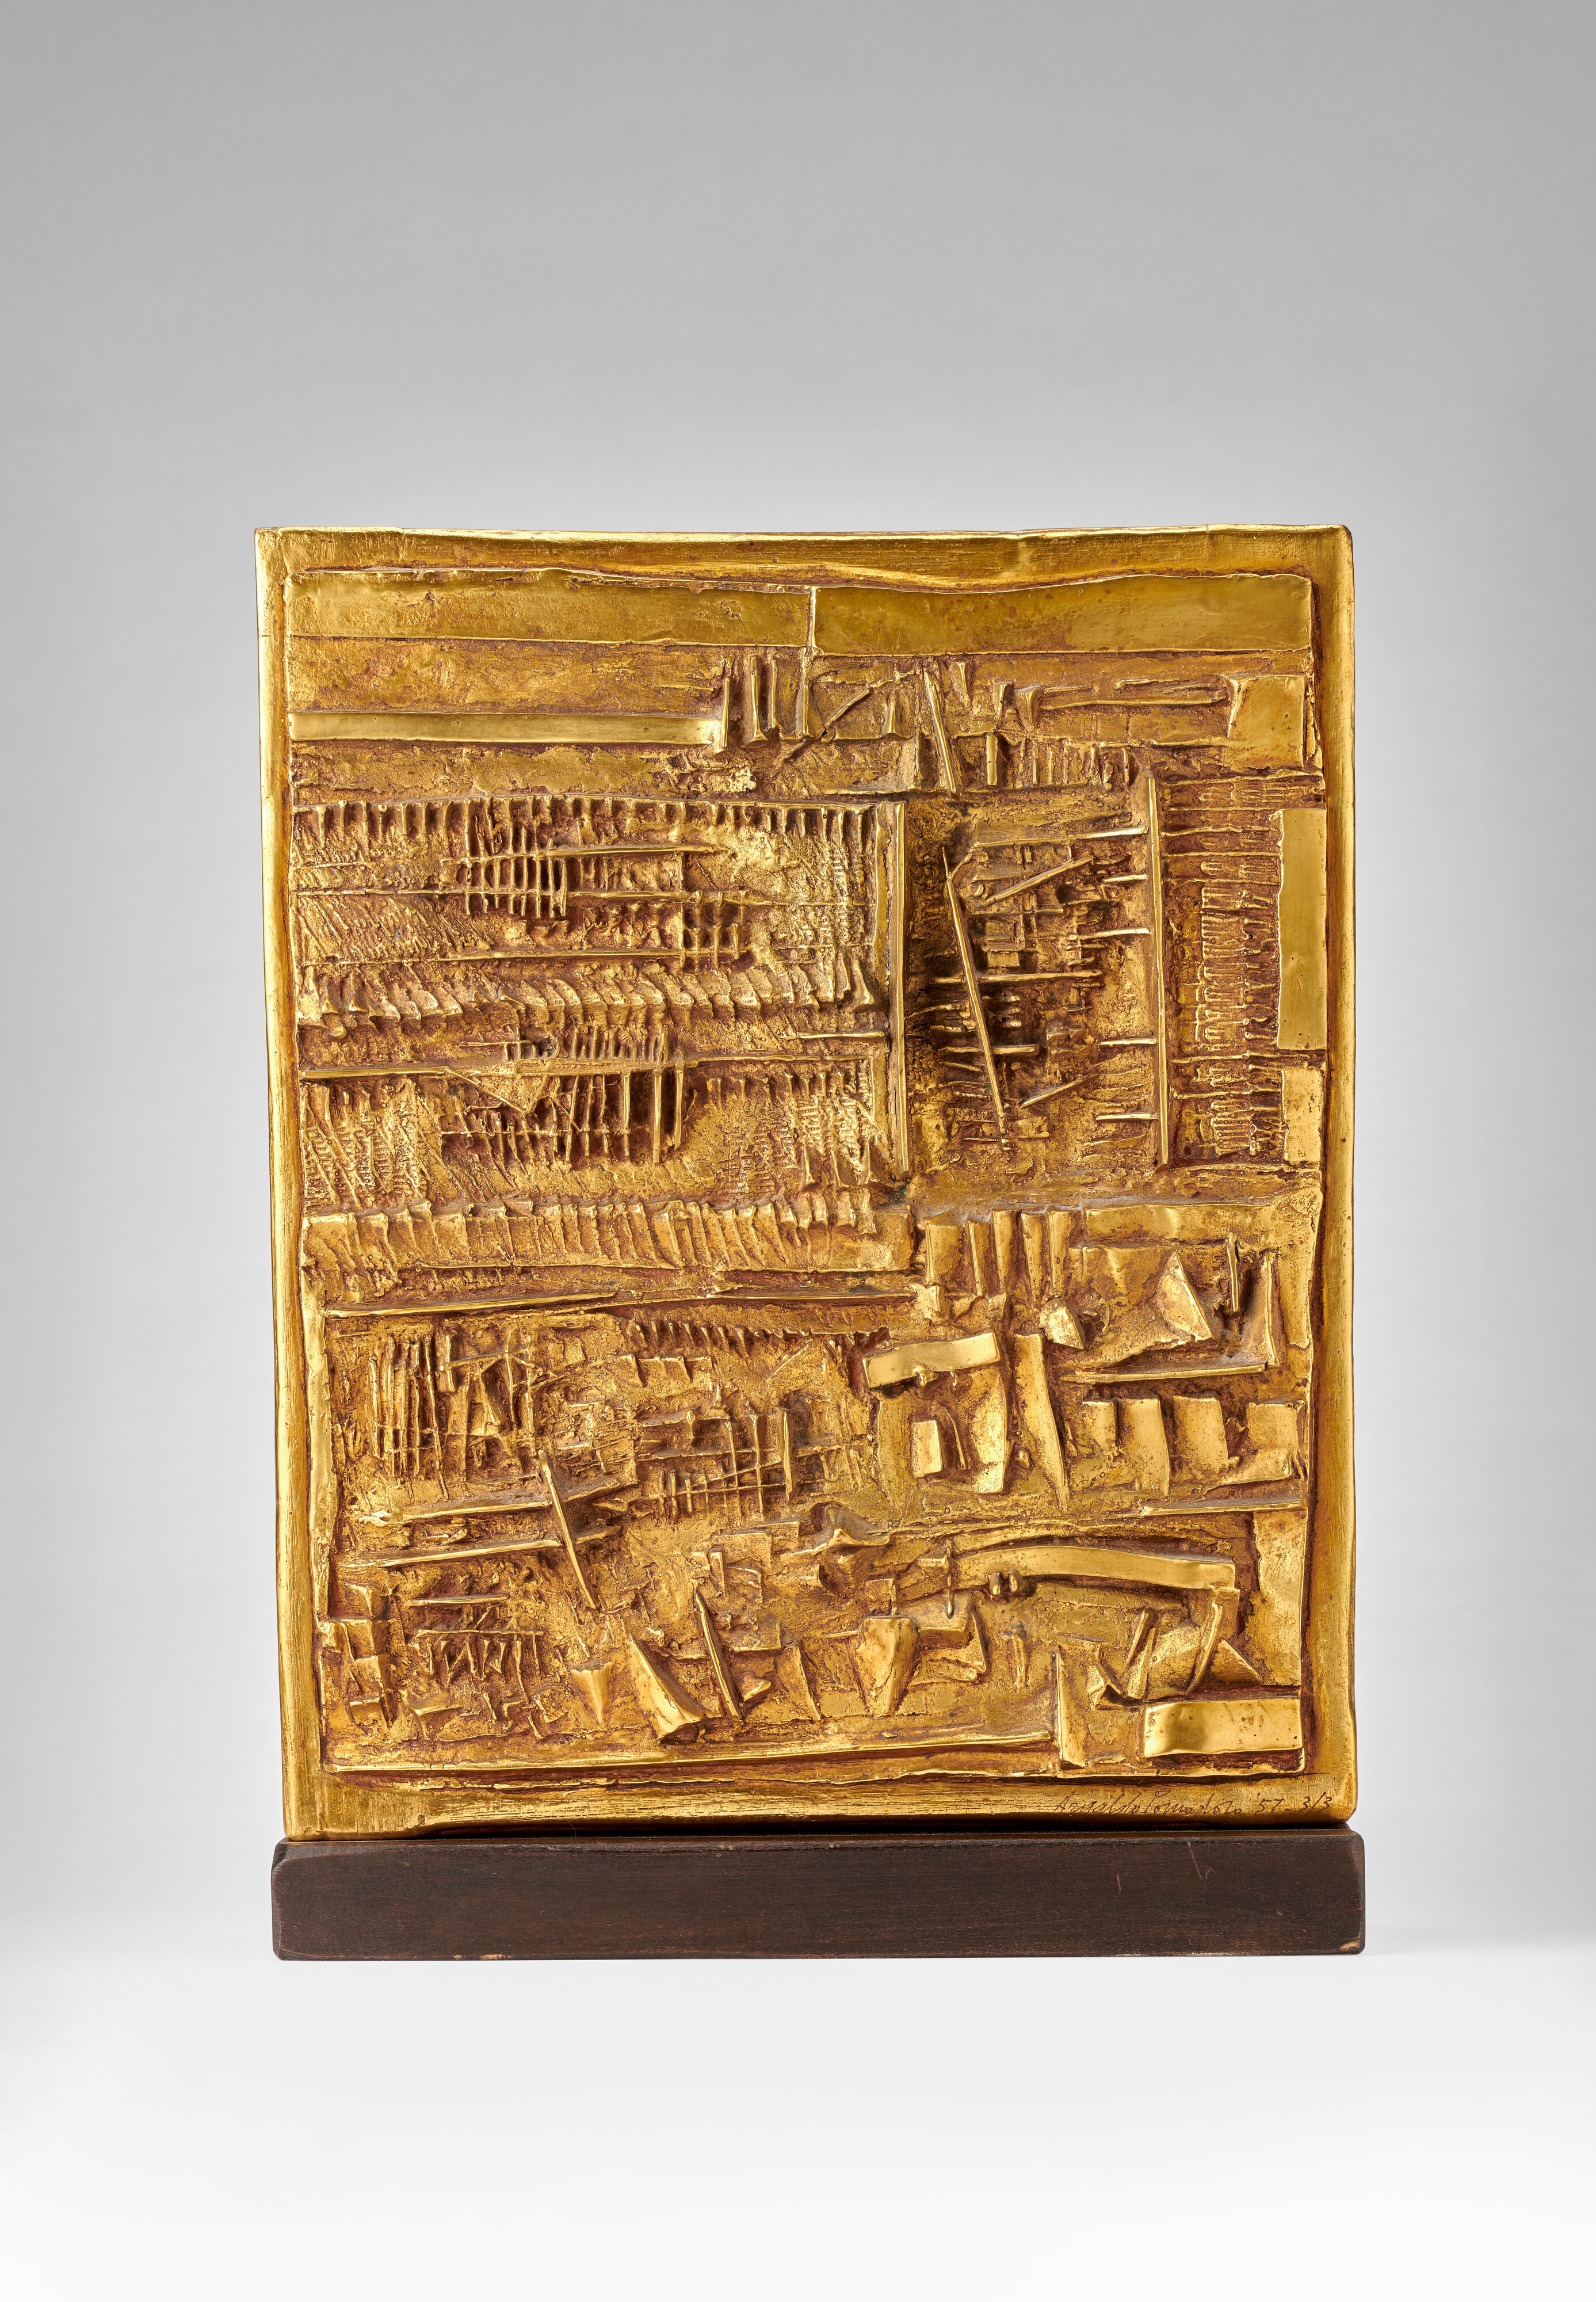 Artwork by Arnaldo Pomodoro, Bassorilievo (studio), Made of gilded bronze and wood